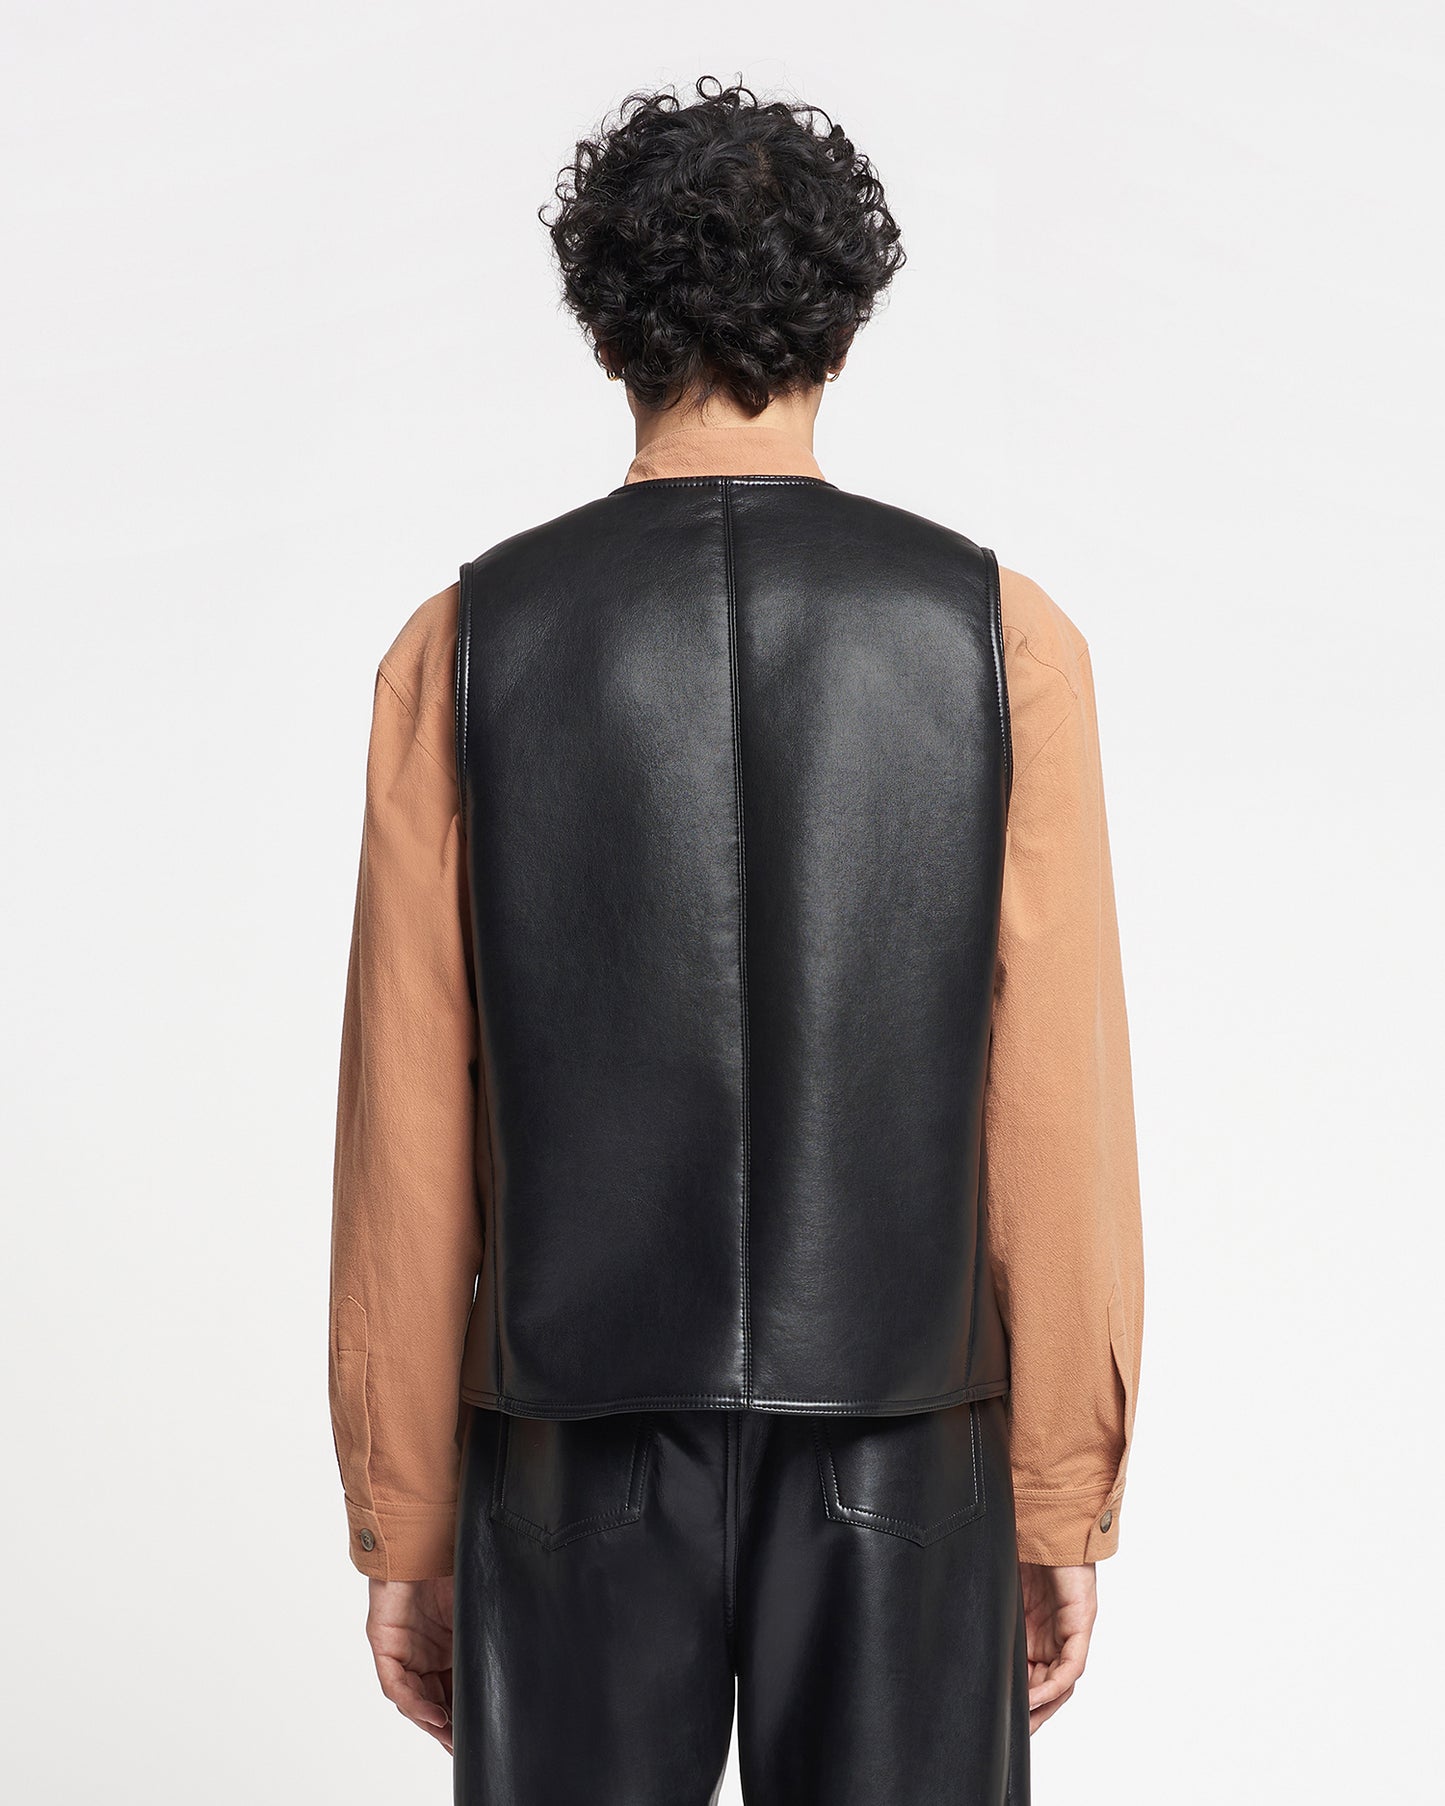 Luben - Regenerated Leather Vest - Black Brown